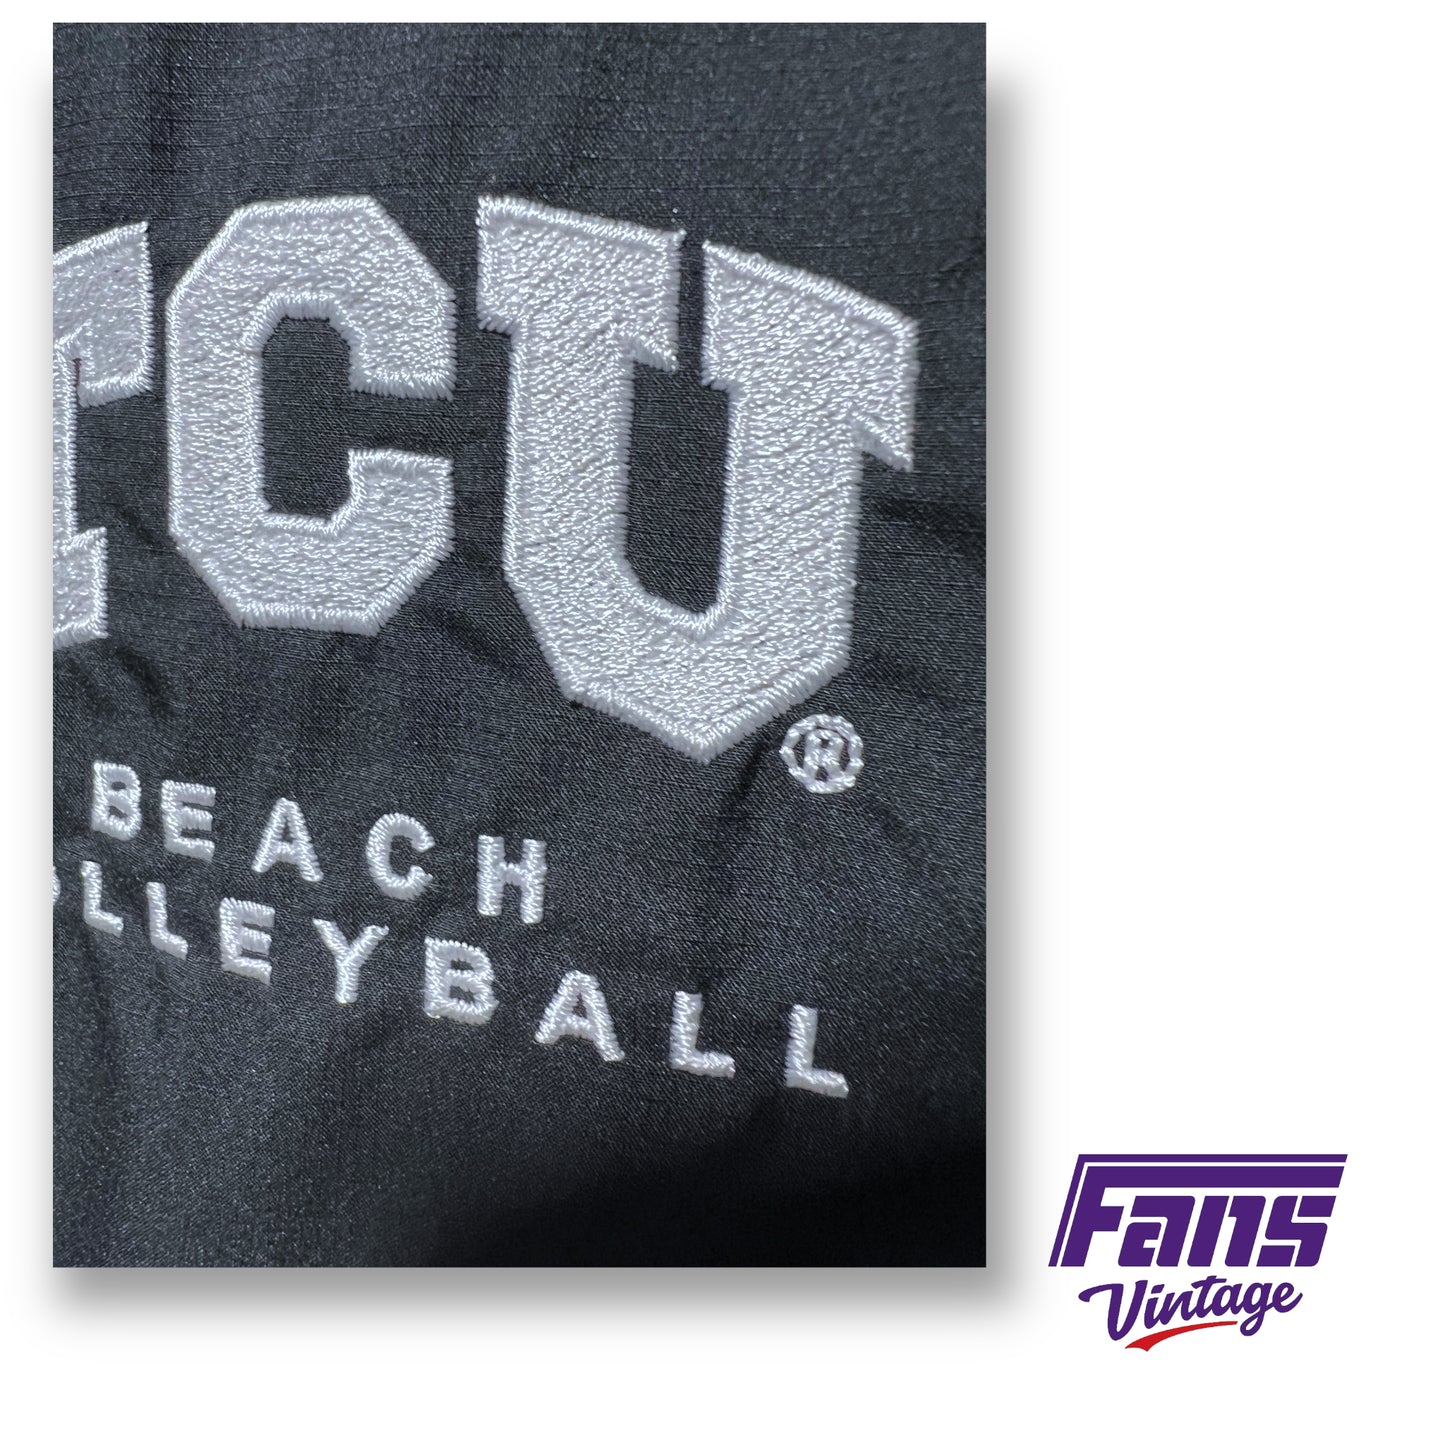 RARE team item! Player Issue TCU Beach Volleyball Nike StormFit sideline jacket